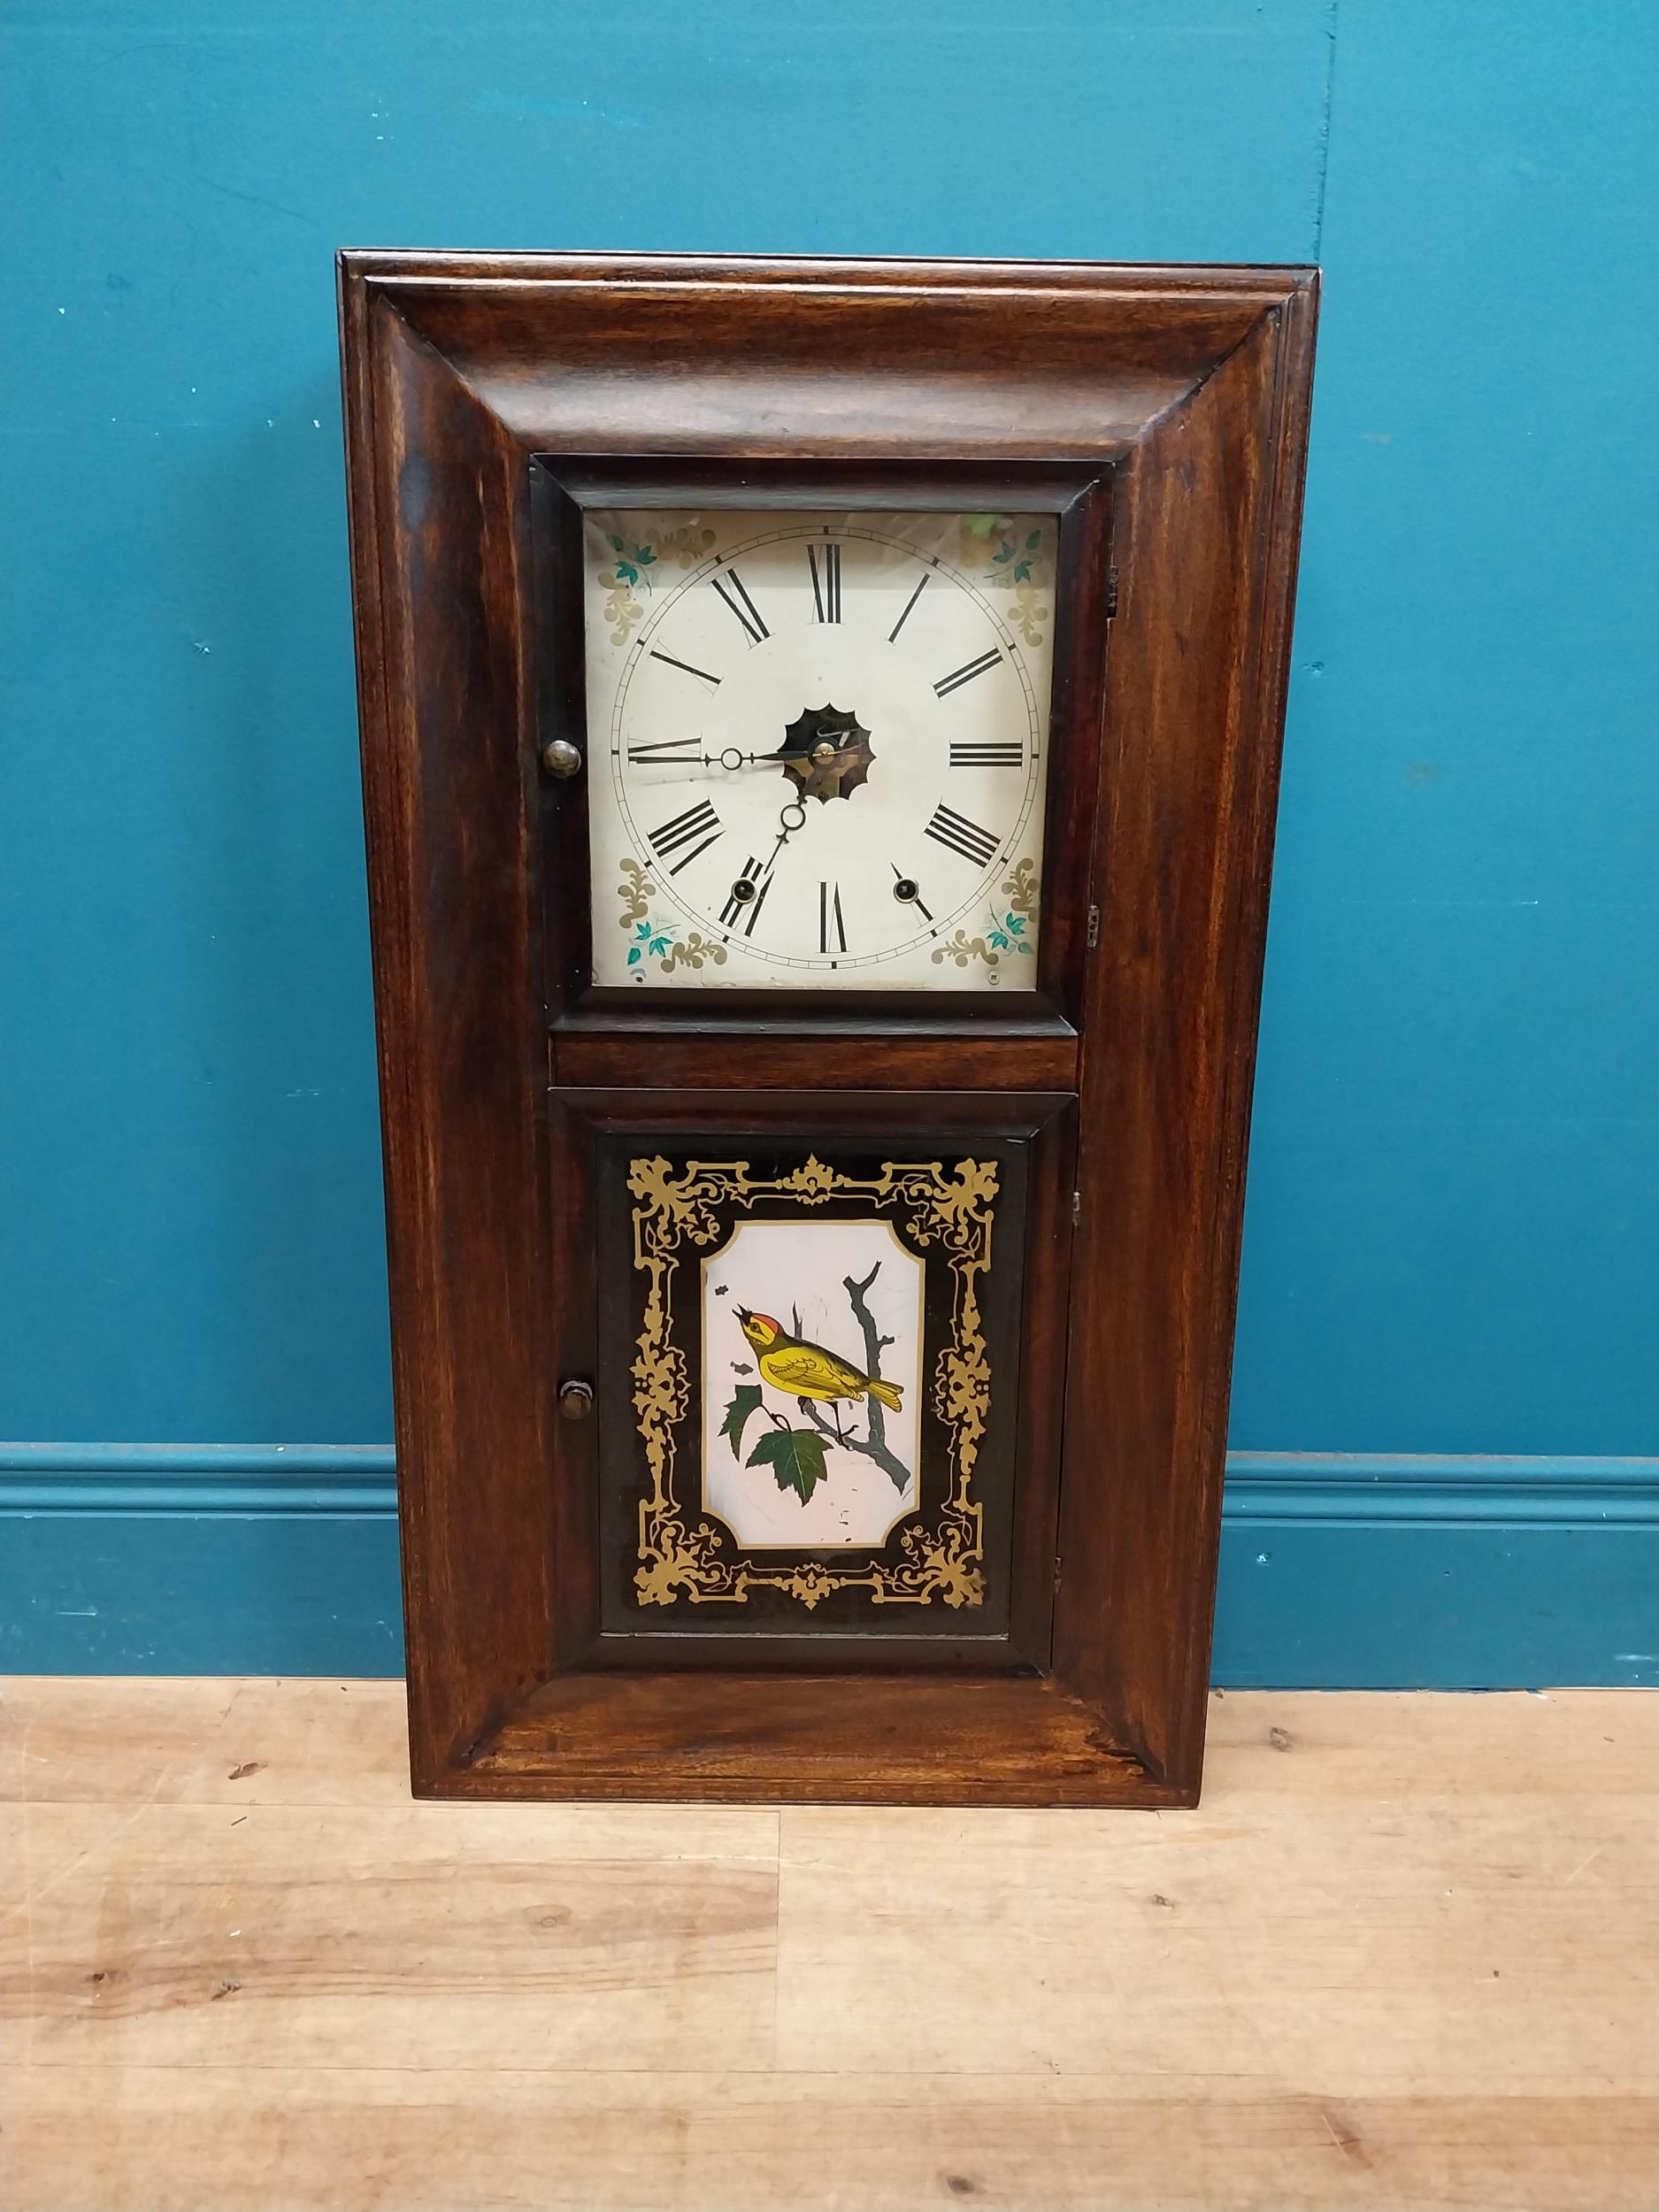 Early 20th C. mahogany wall clock {77 cm H x 43 cm W x 13 cm D}.